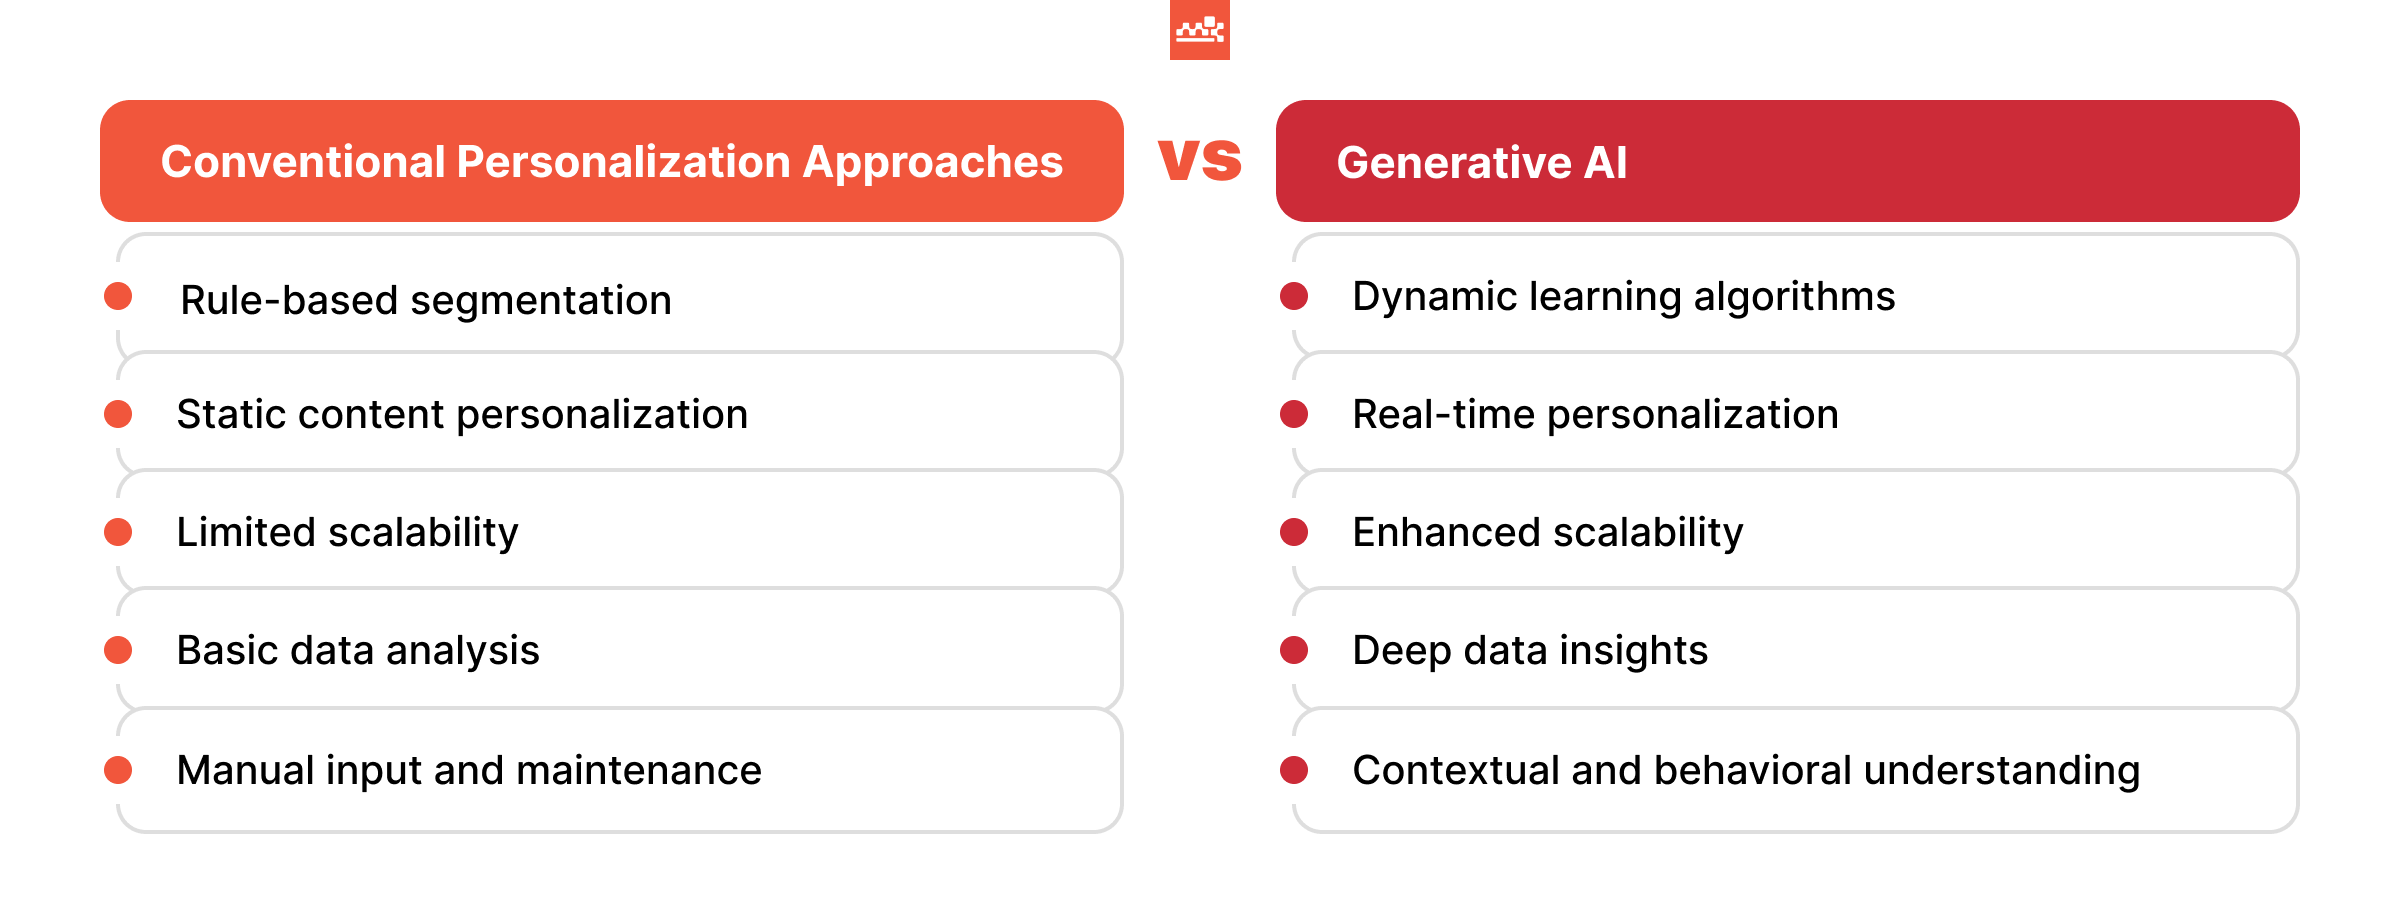 Conventional Personalization Methods VS Generative AI